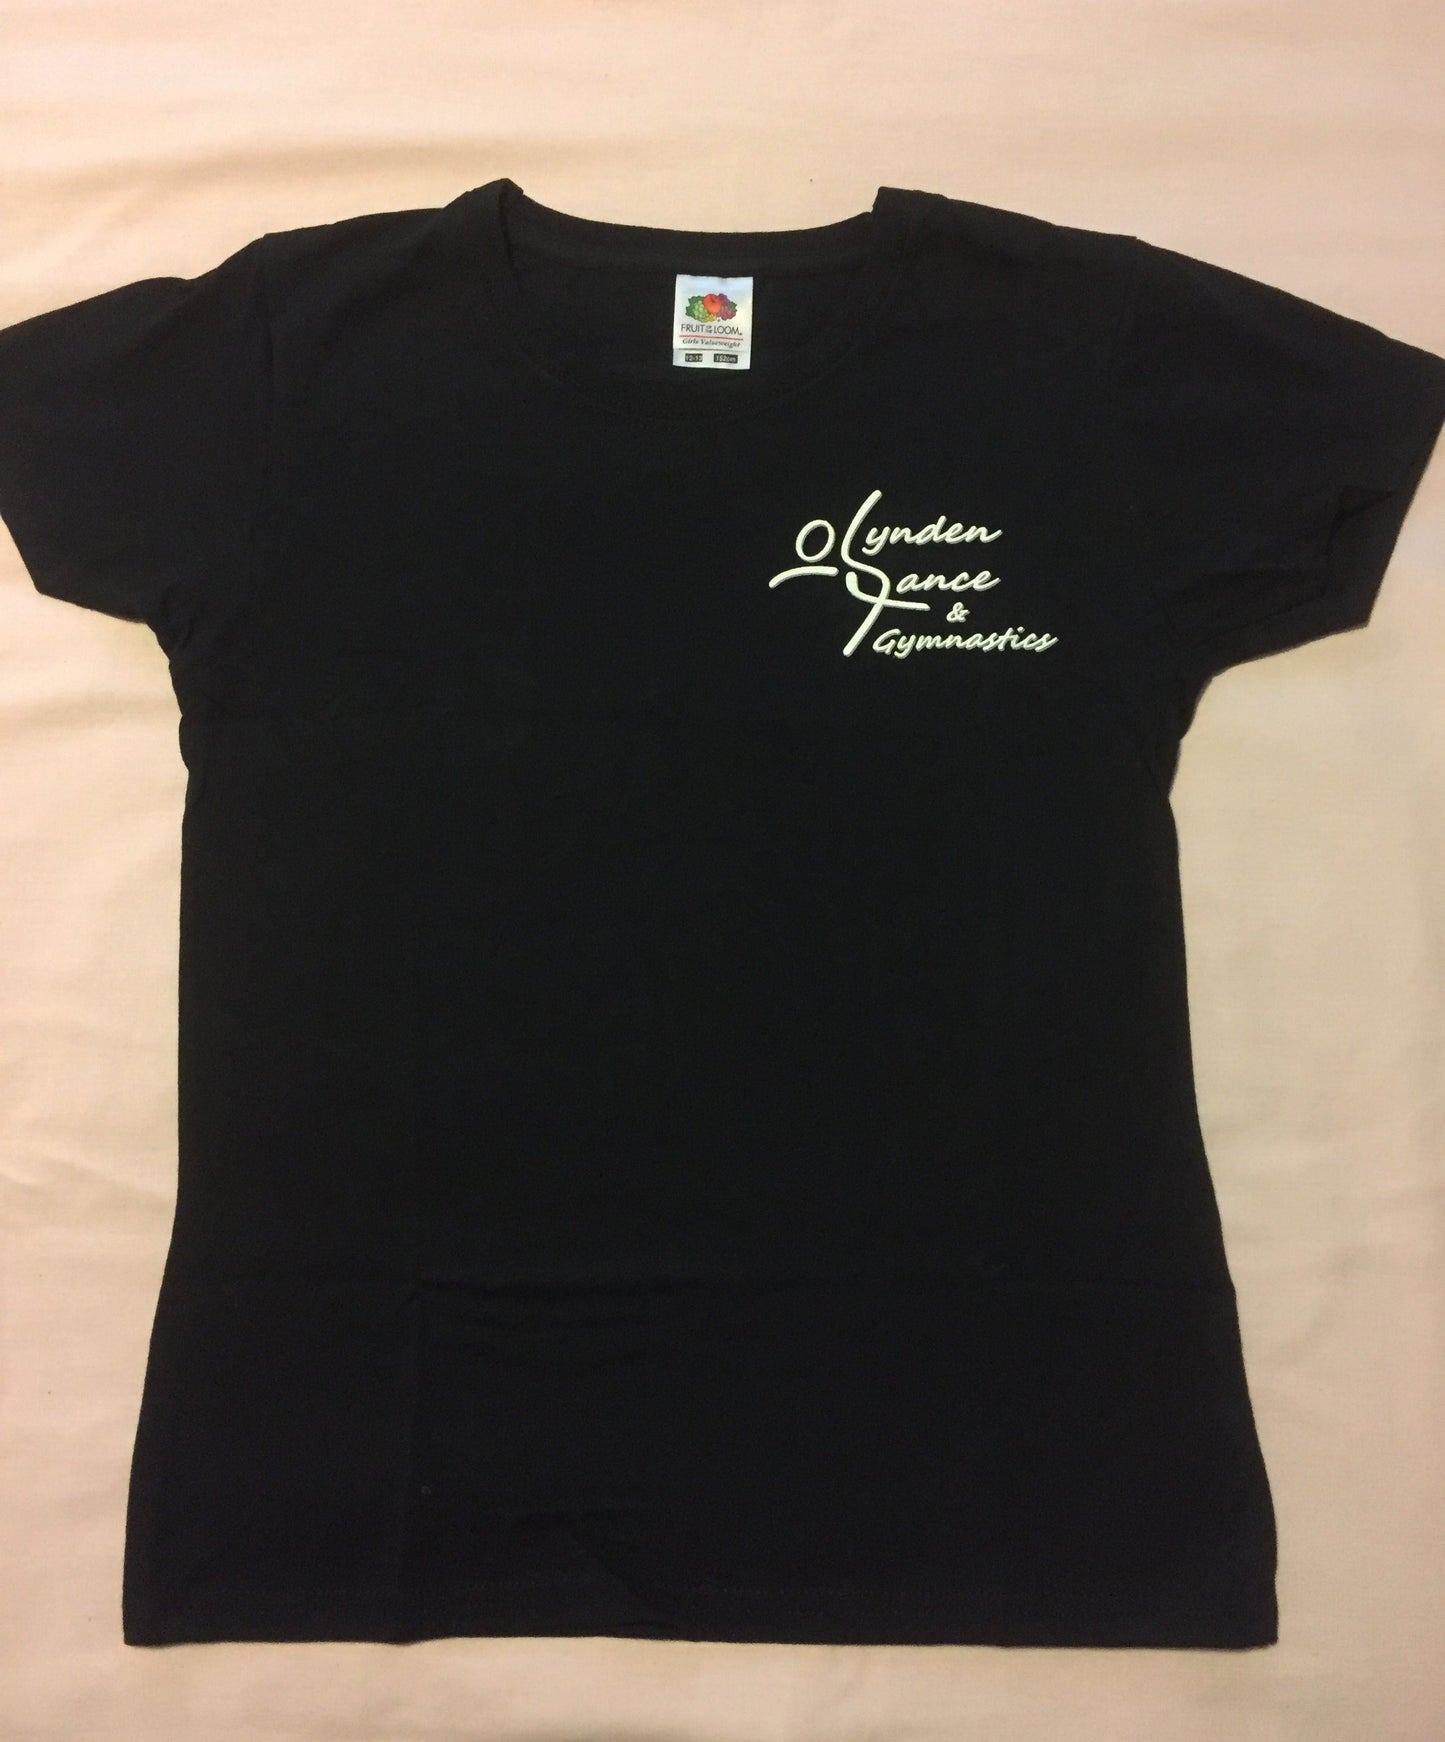 Uniform T-Shirt, black with white Lynden logo